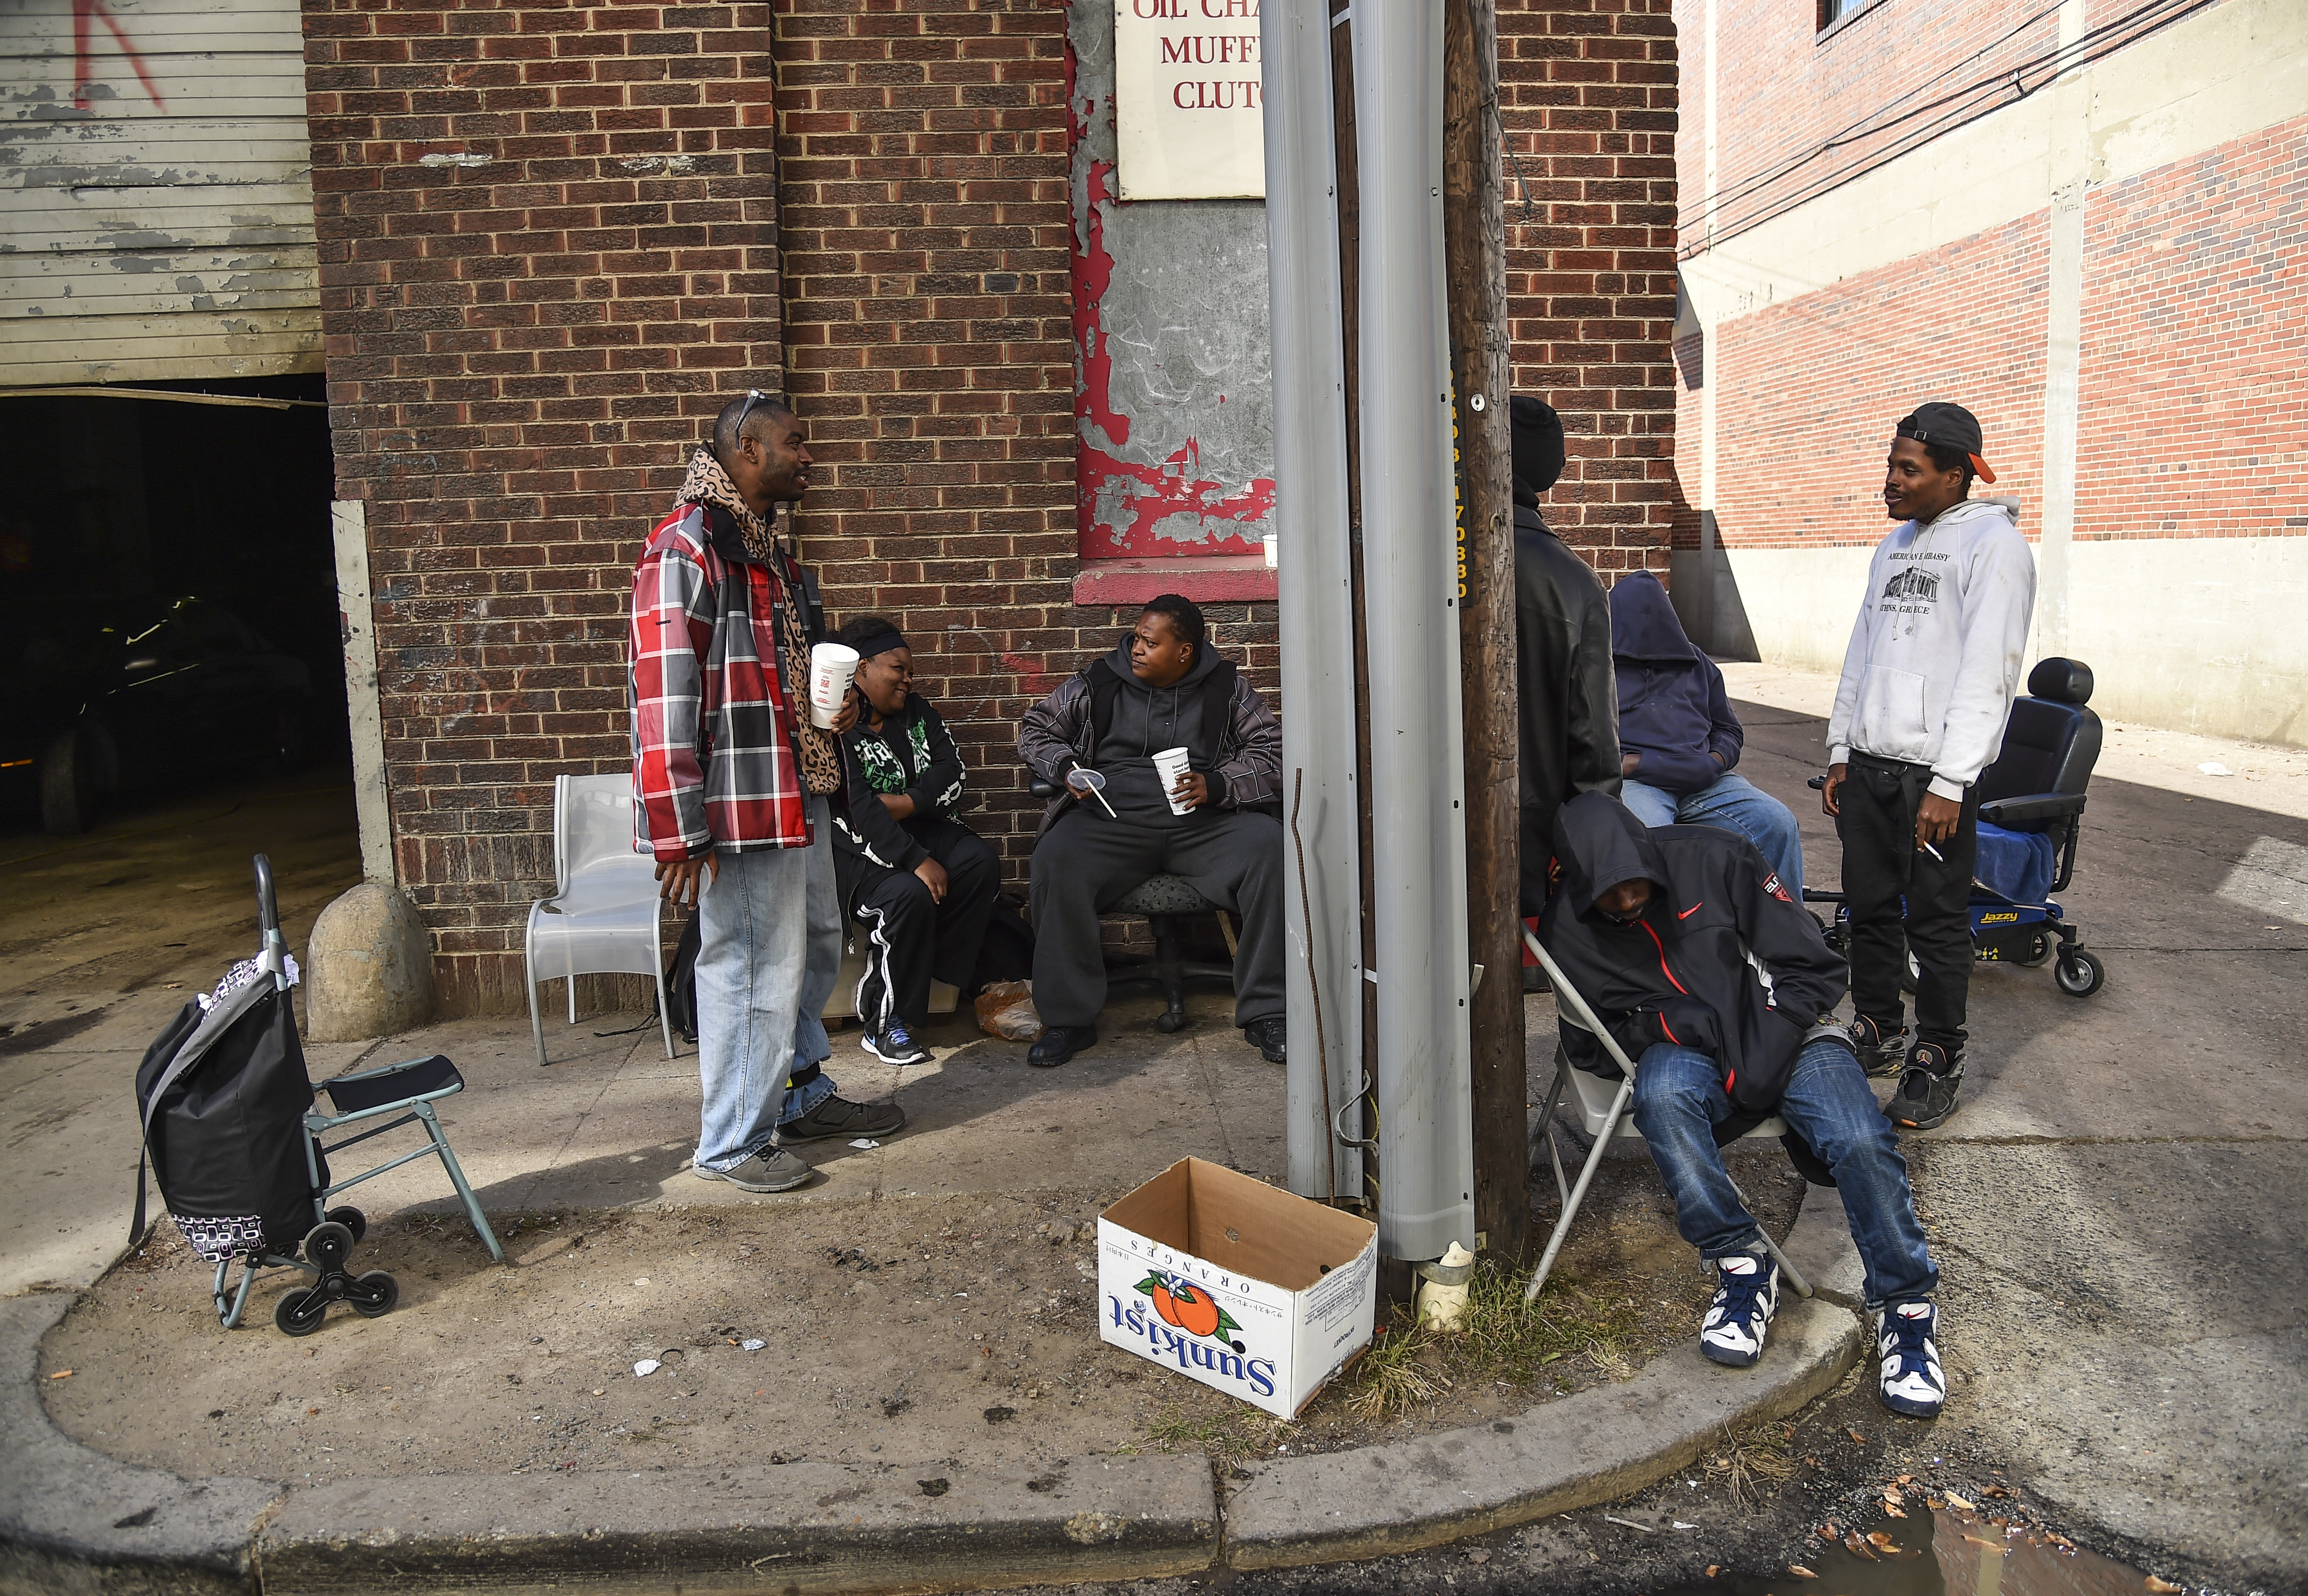 WASHINGTON, DC - OCTOBER 16: Members of the homeless community